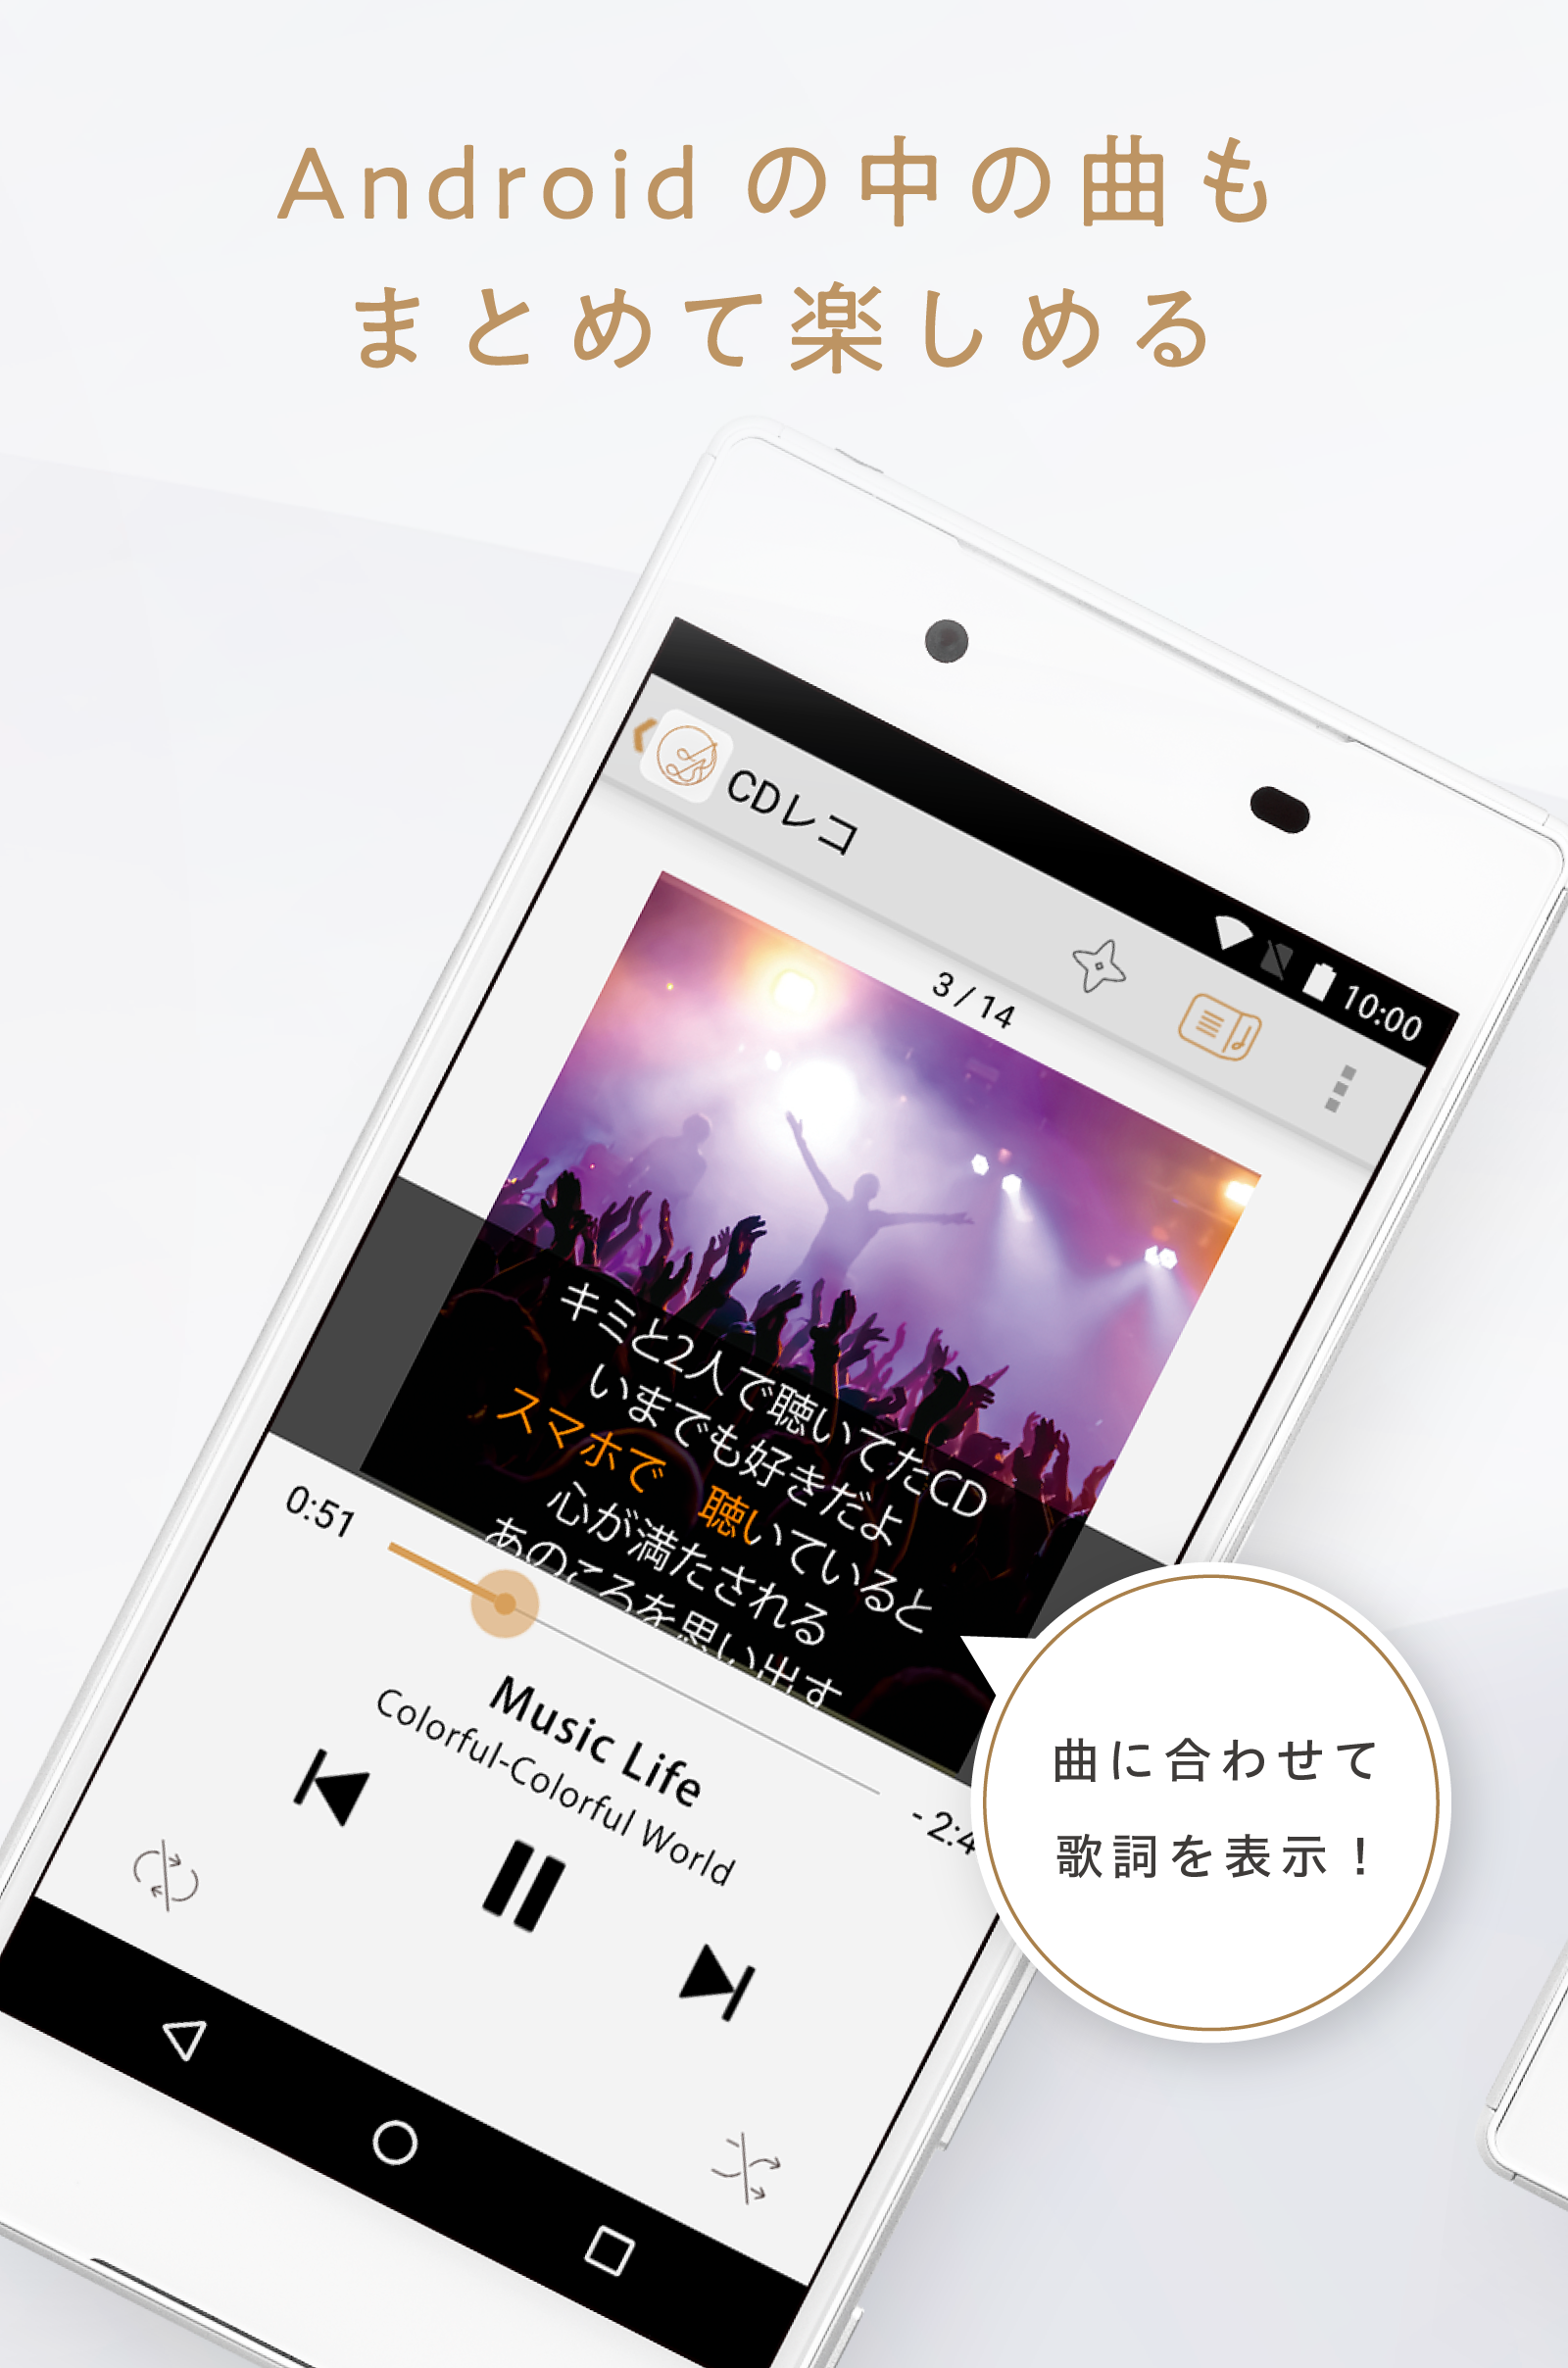 Android application CDレコ screenshort